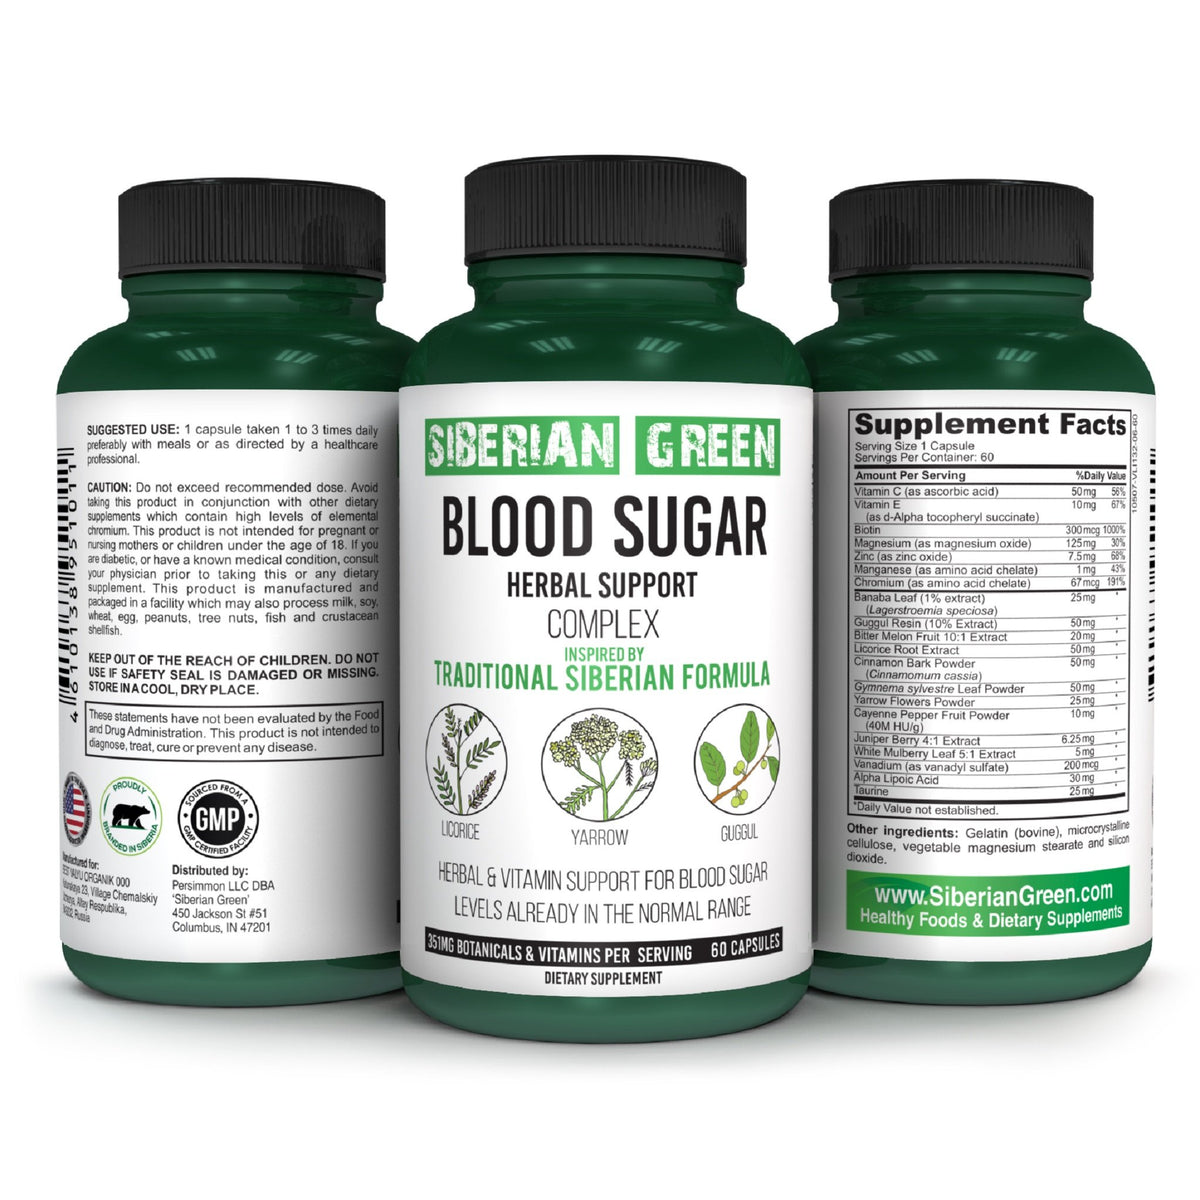 Siberian Green Blood Sugar Herbal Support - Yarrow Guggul Licorice - 60 Capsules - Traditional Siberian Formula